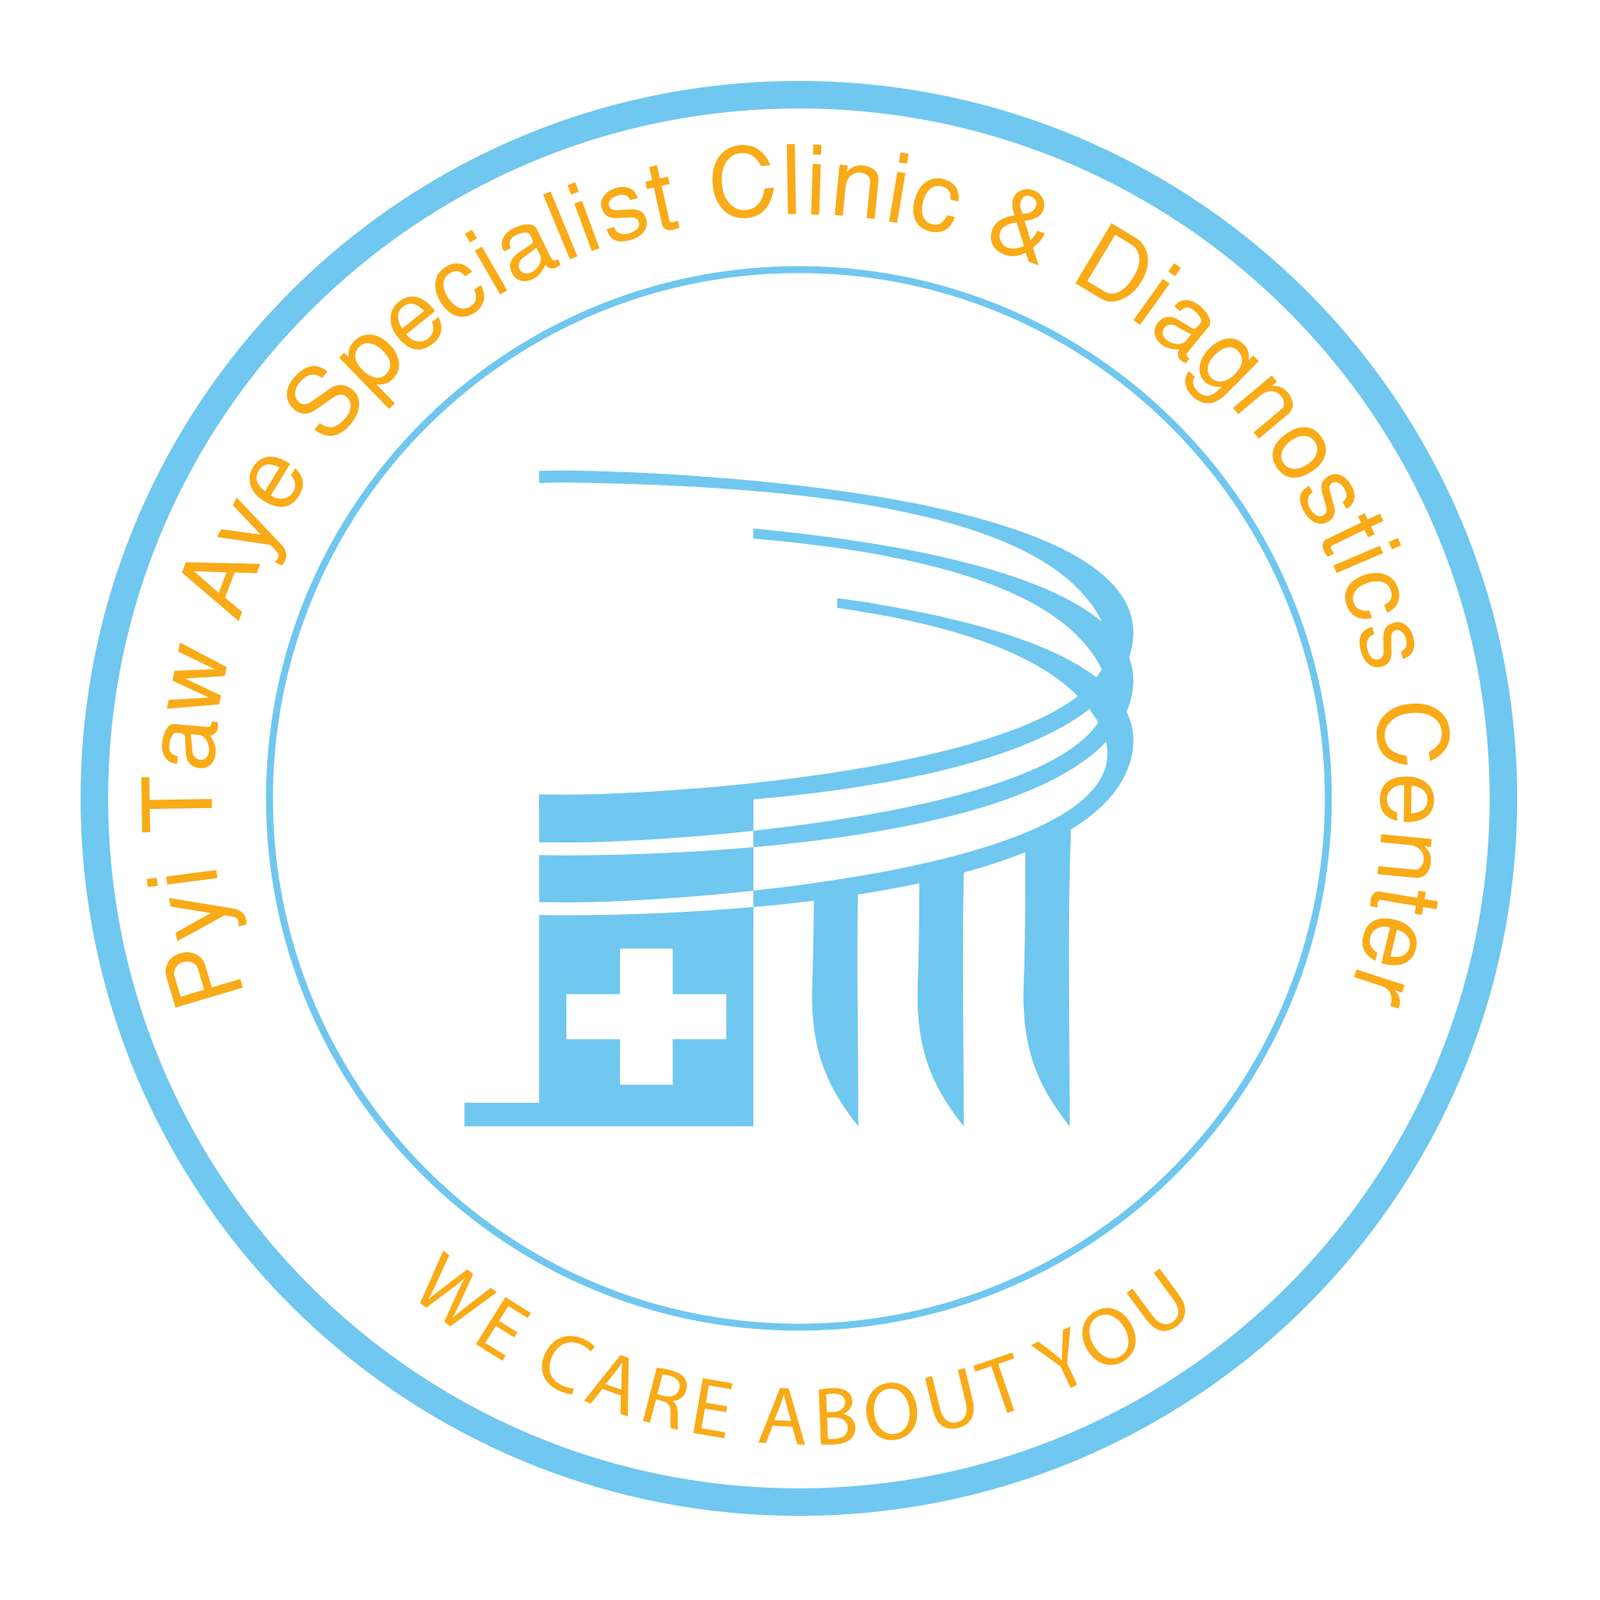 Pyi Taw Aye Specialist Clinic & Diagnostics Center